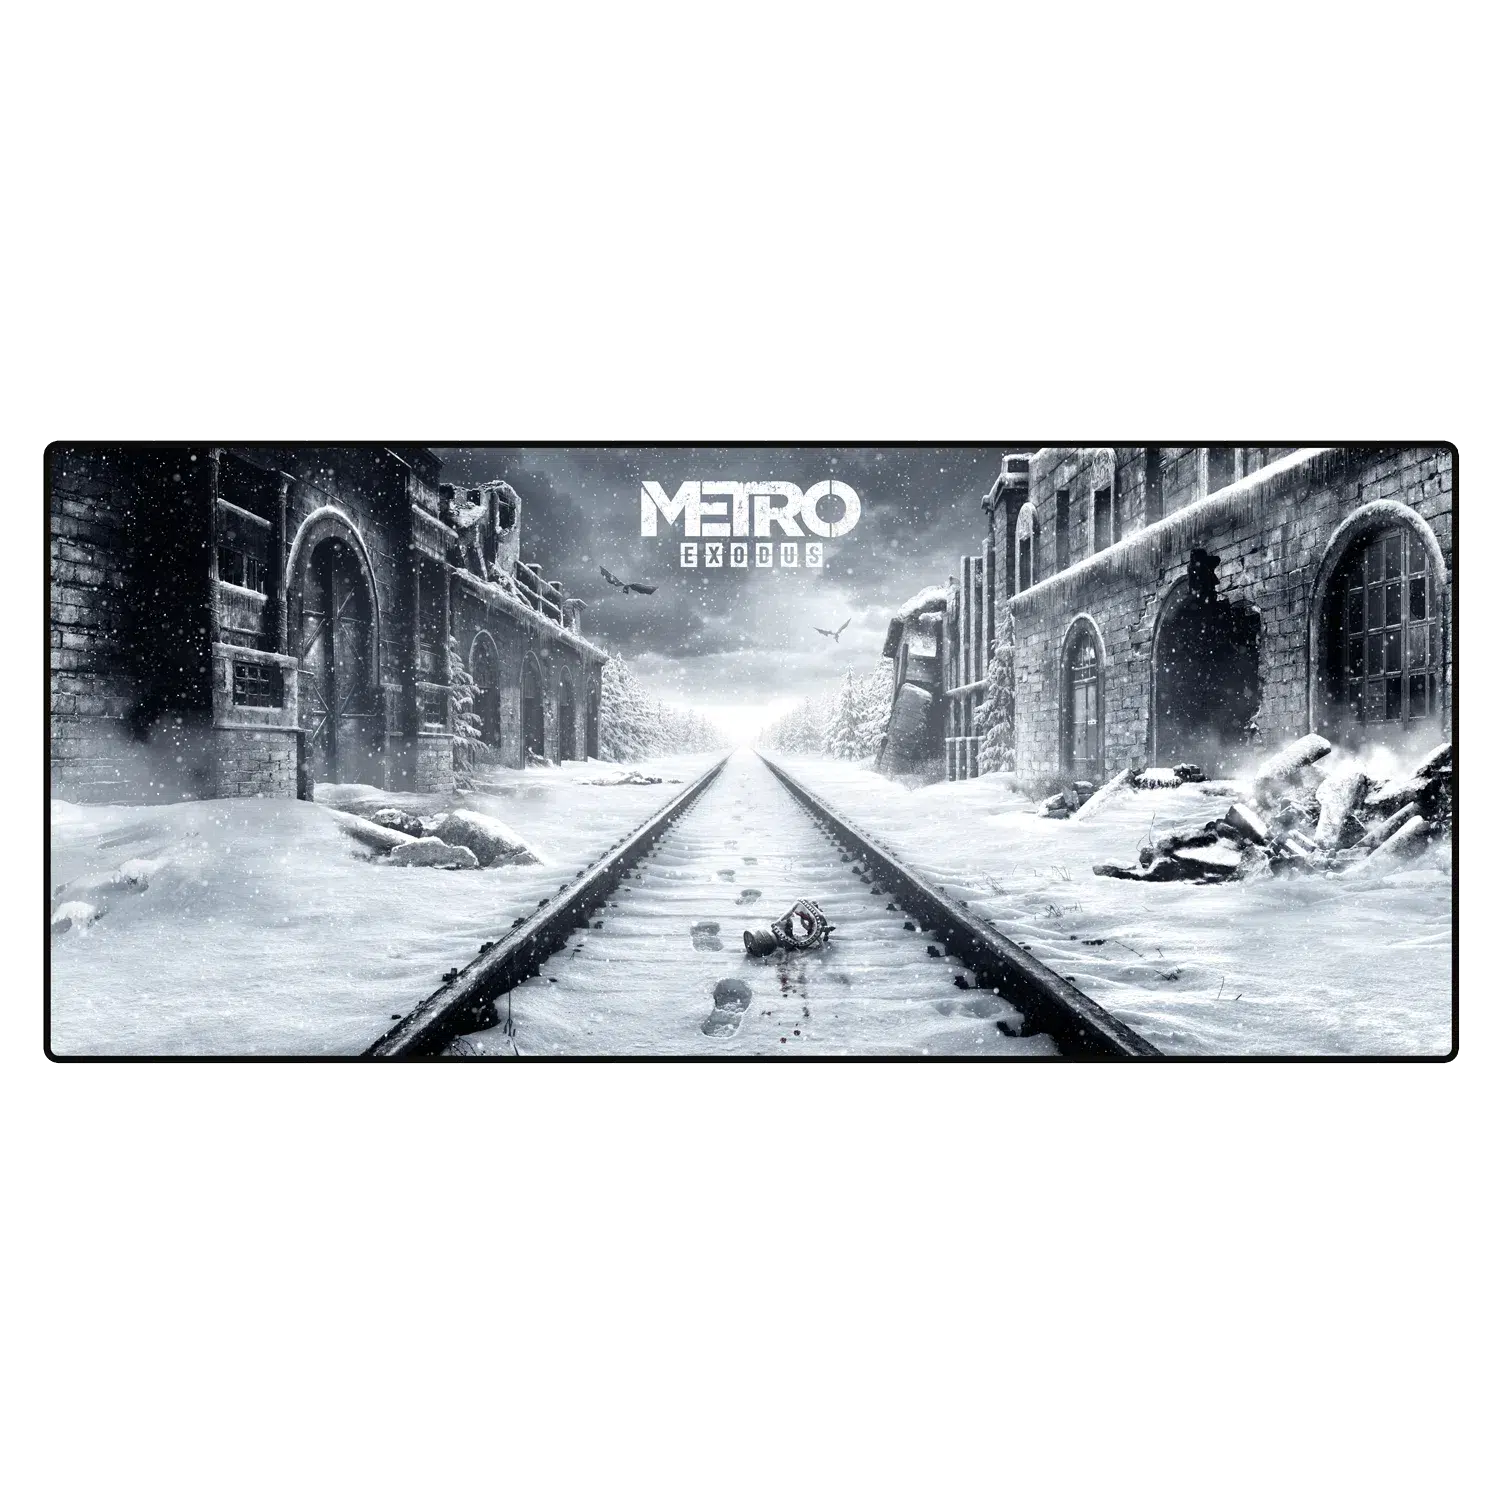 Metro Exodus Mousemat "Winter" Cover